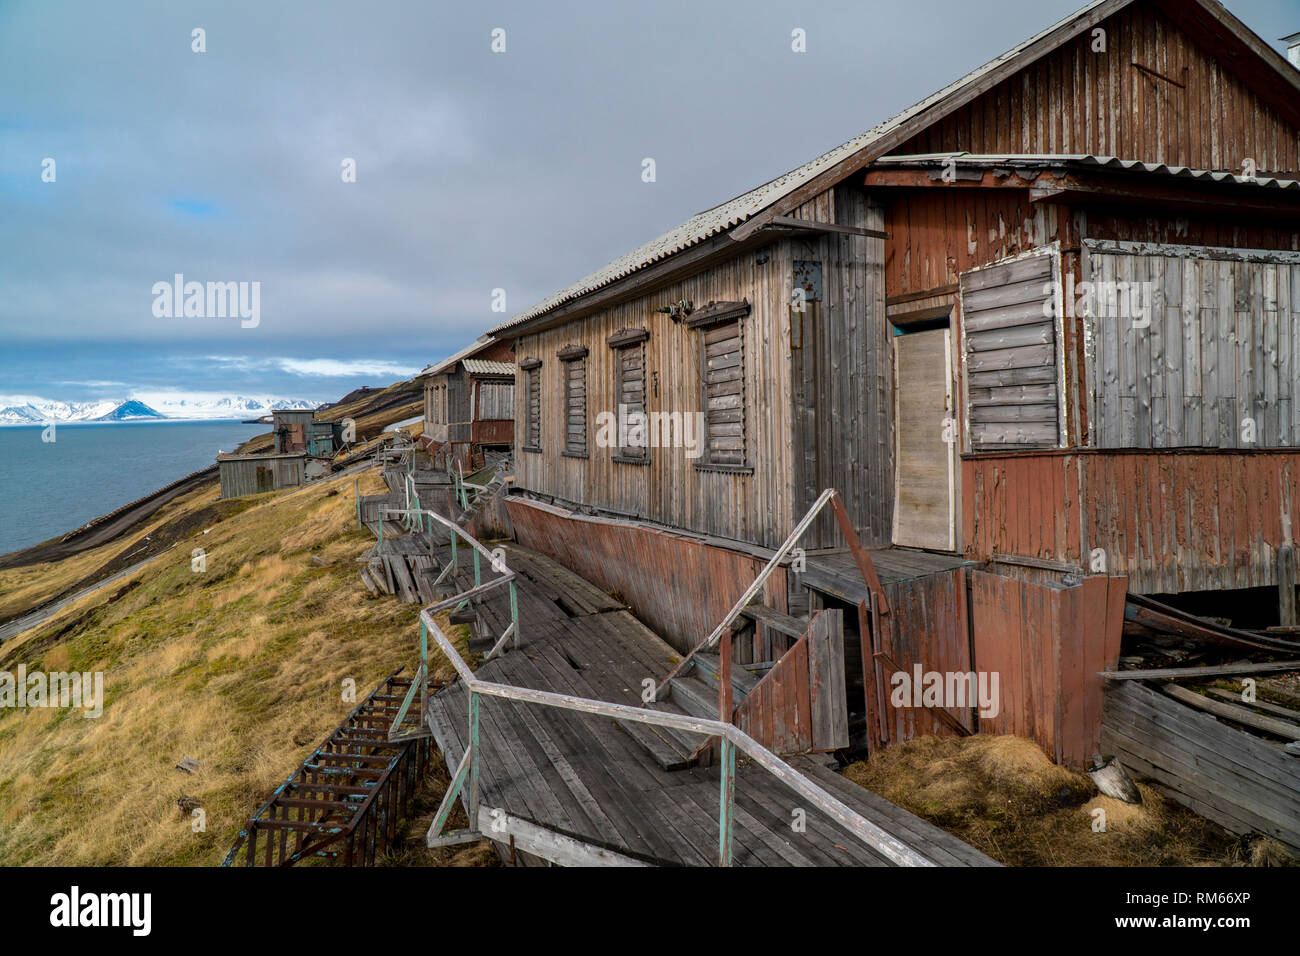 Pyramiden a Coal mining town, former Russian coal mining settlement in Billefjorden, Spitsbergen, Norway Stock Photo